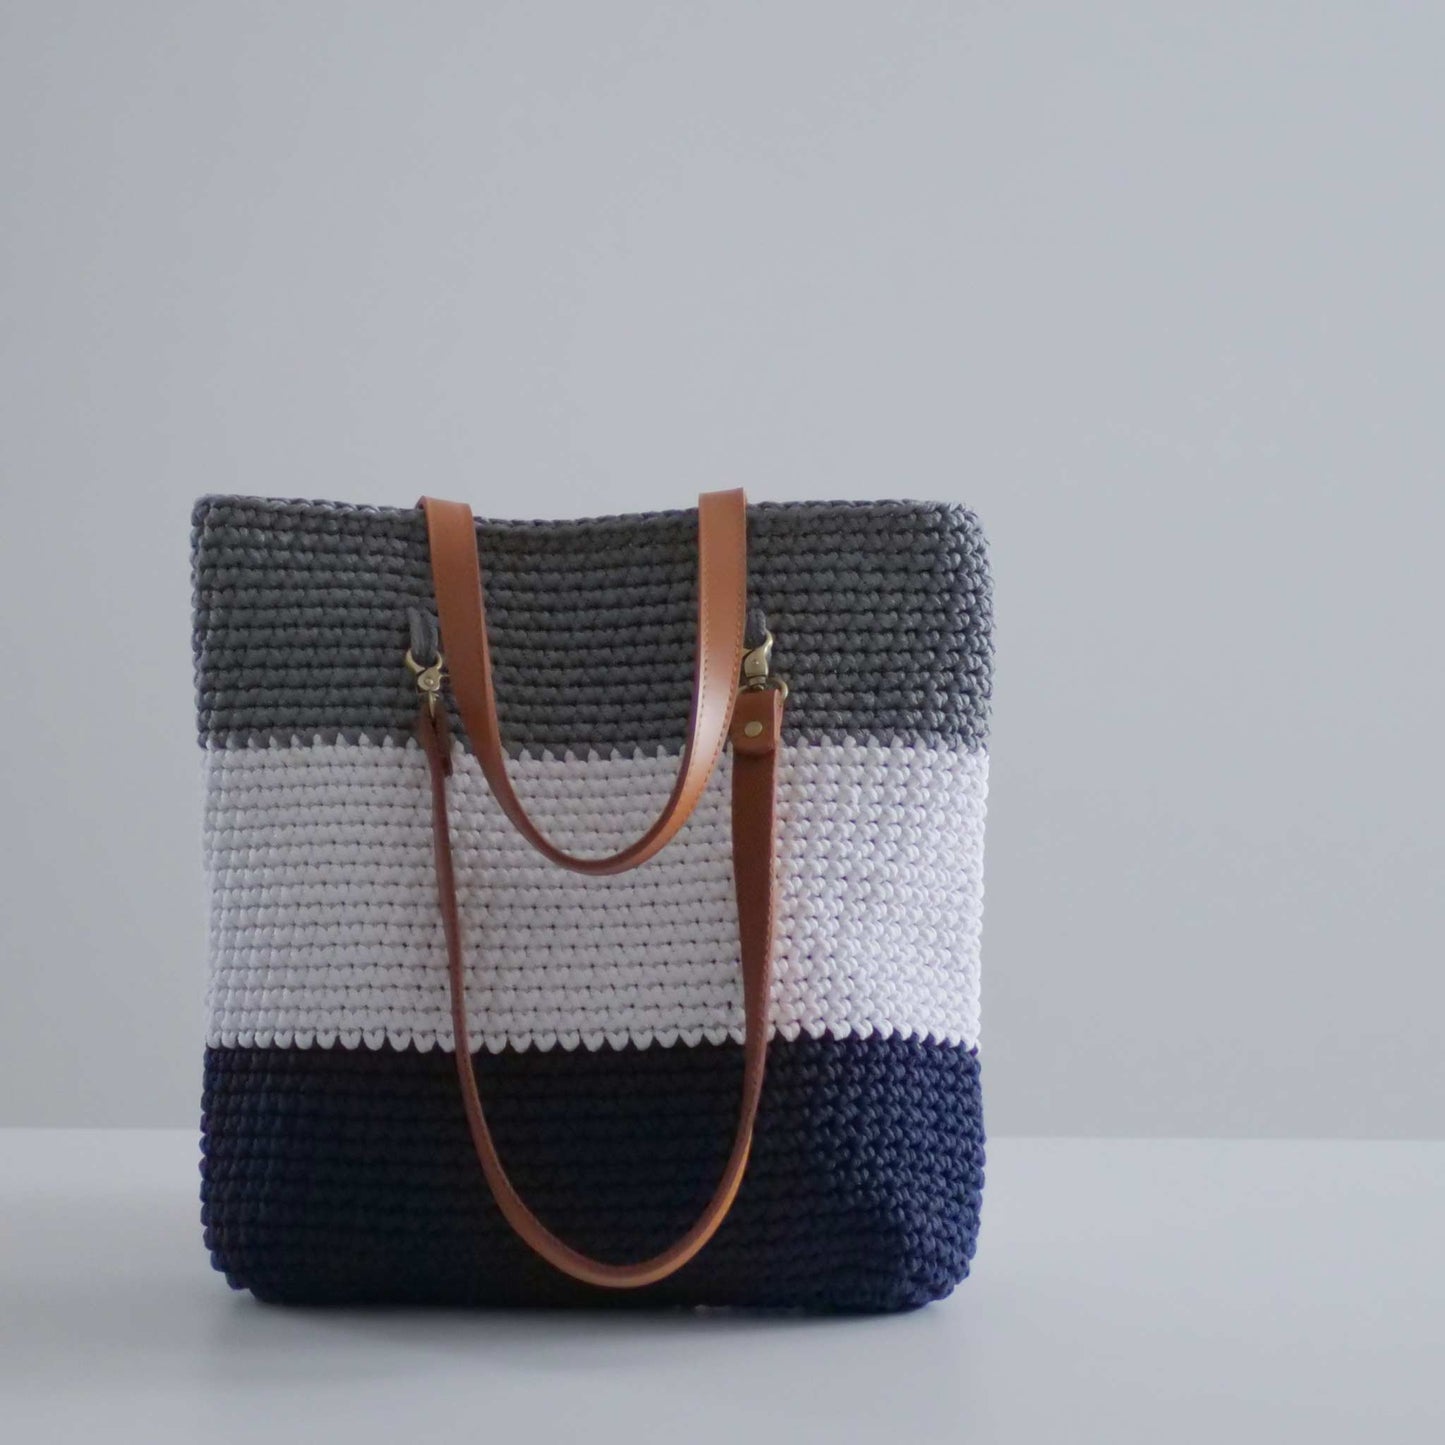 Simple Crochet Bag PDF